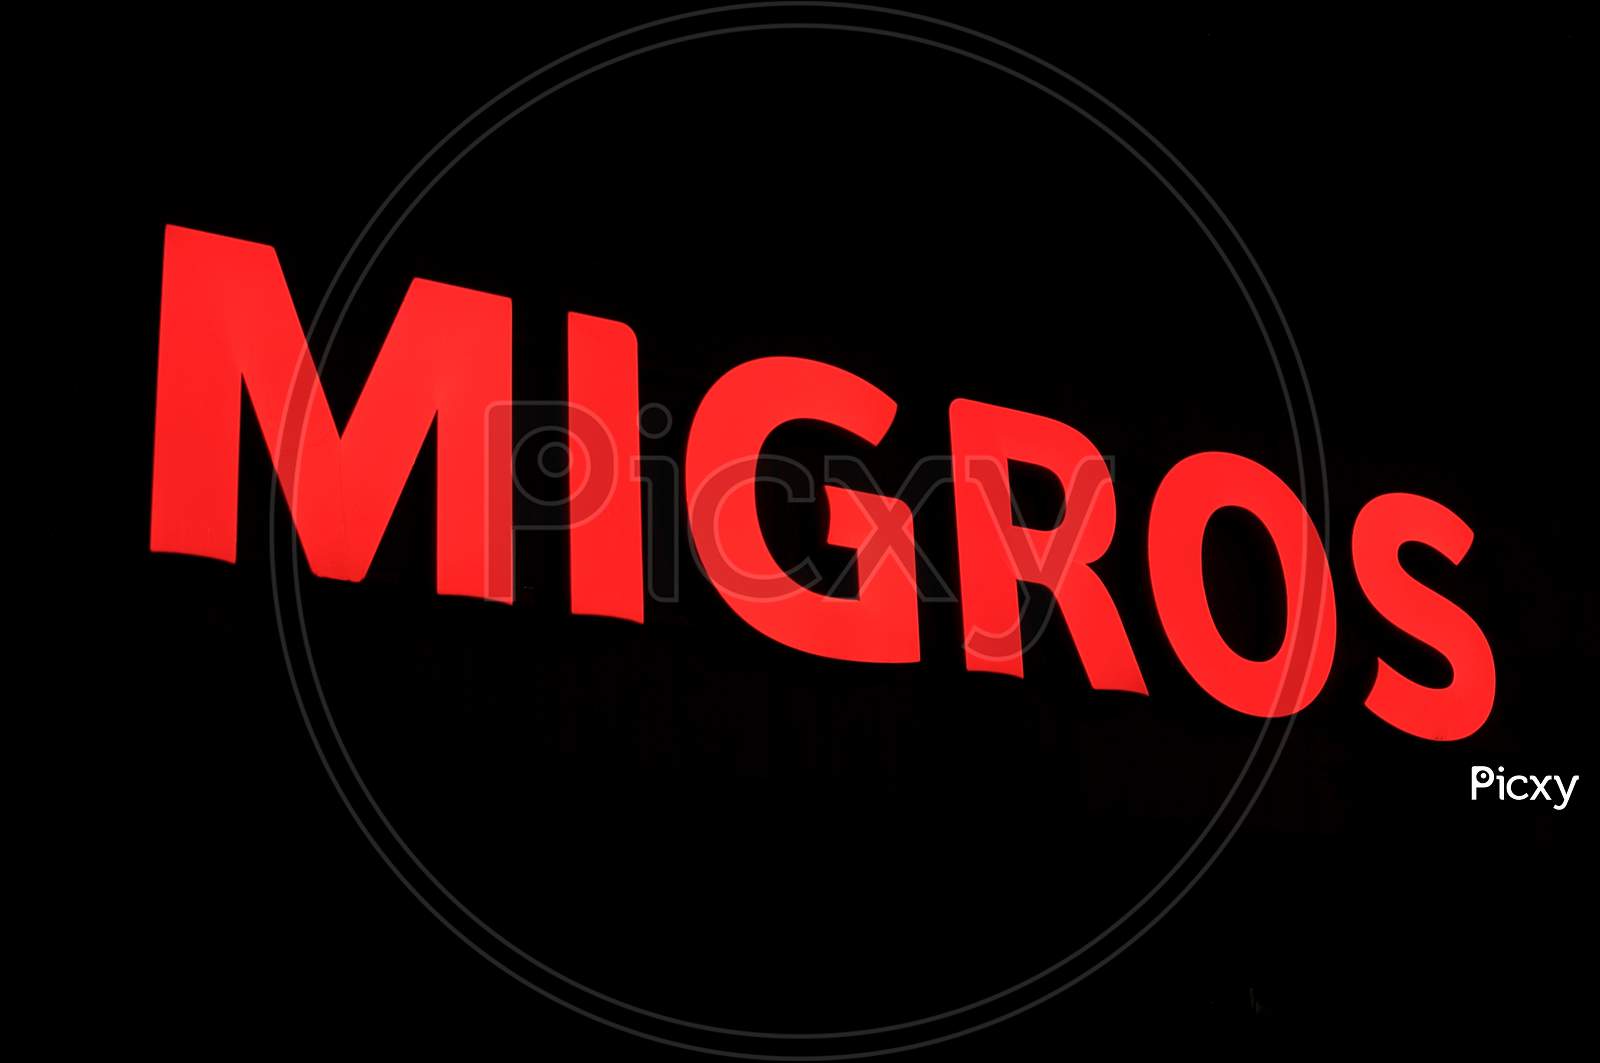 Illuminated Migros Sign